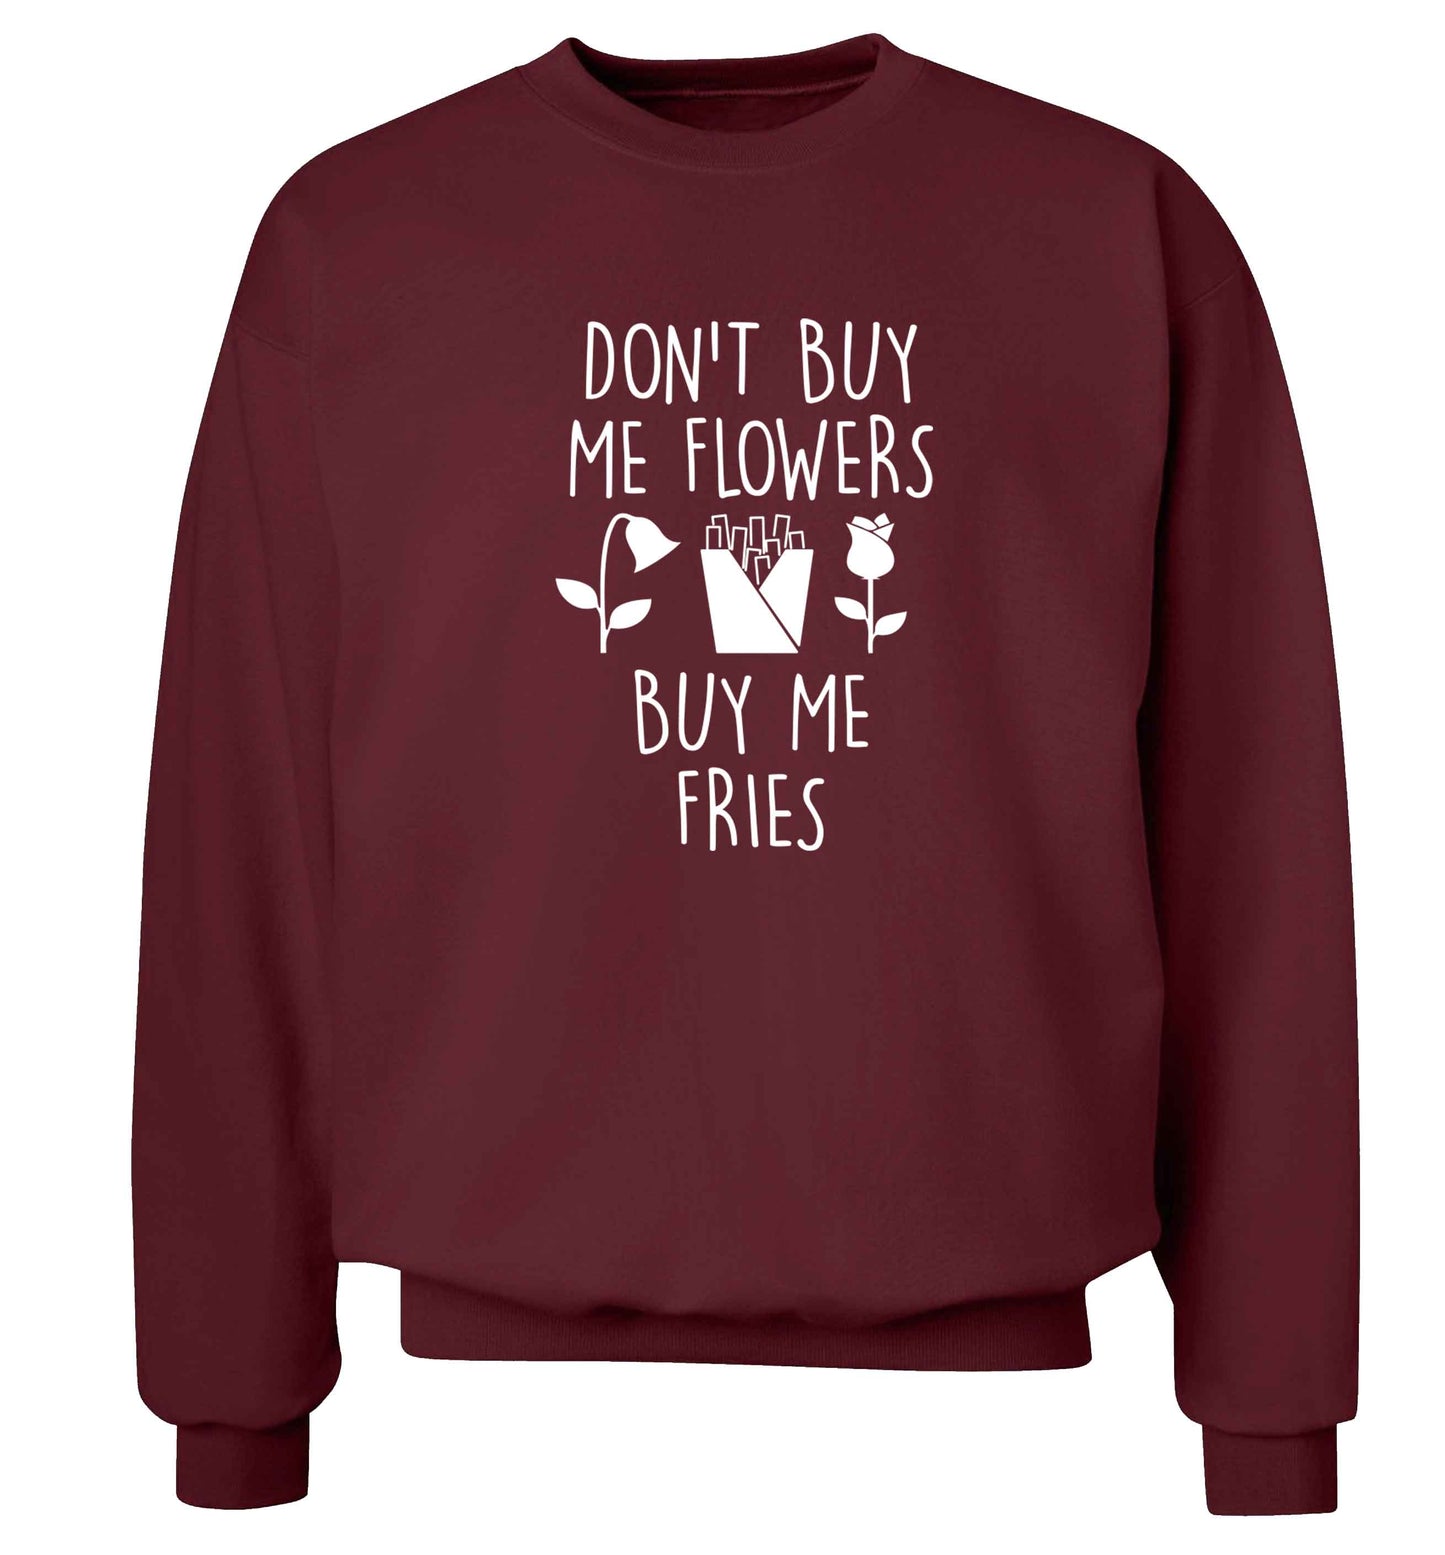 Don't buy me flowers buy me fries adult's unisex maroon sweater 2XL